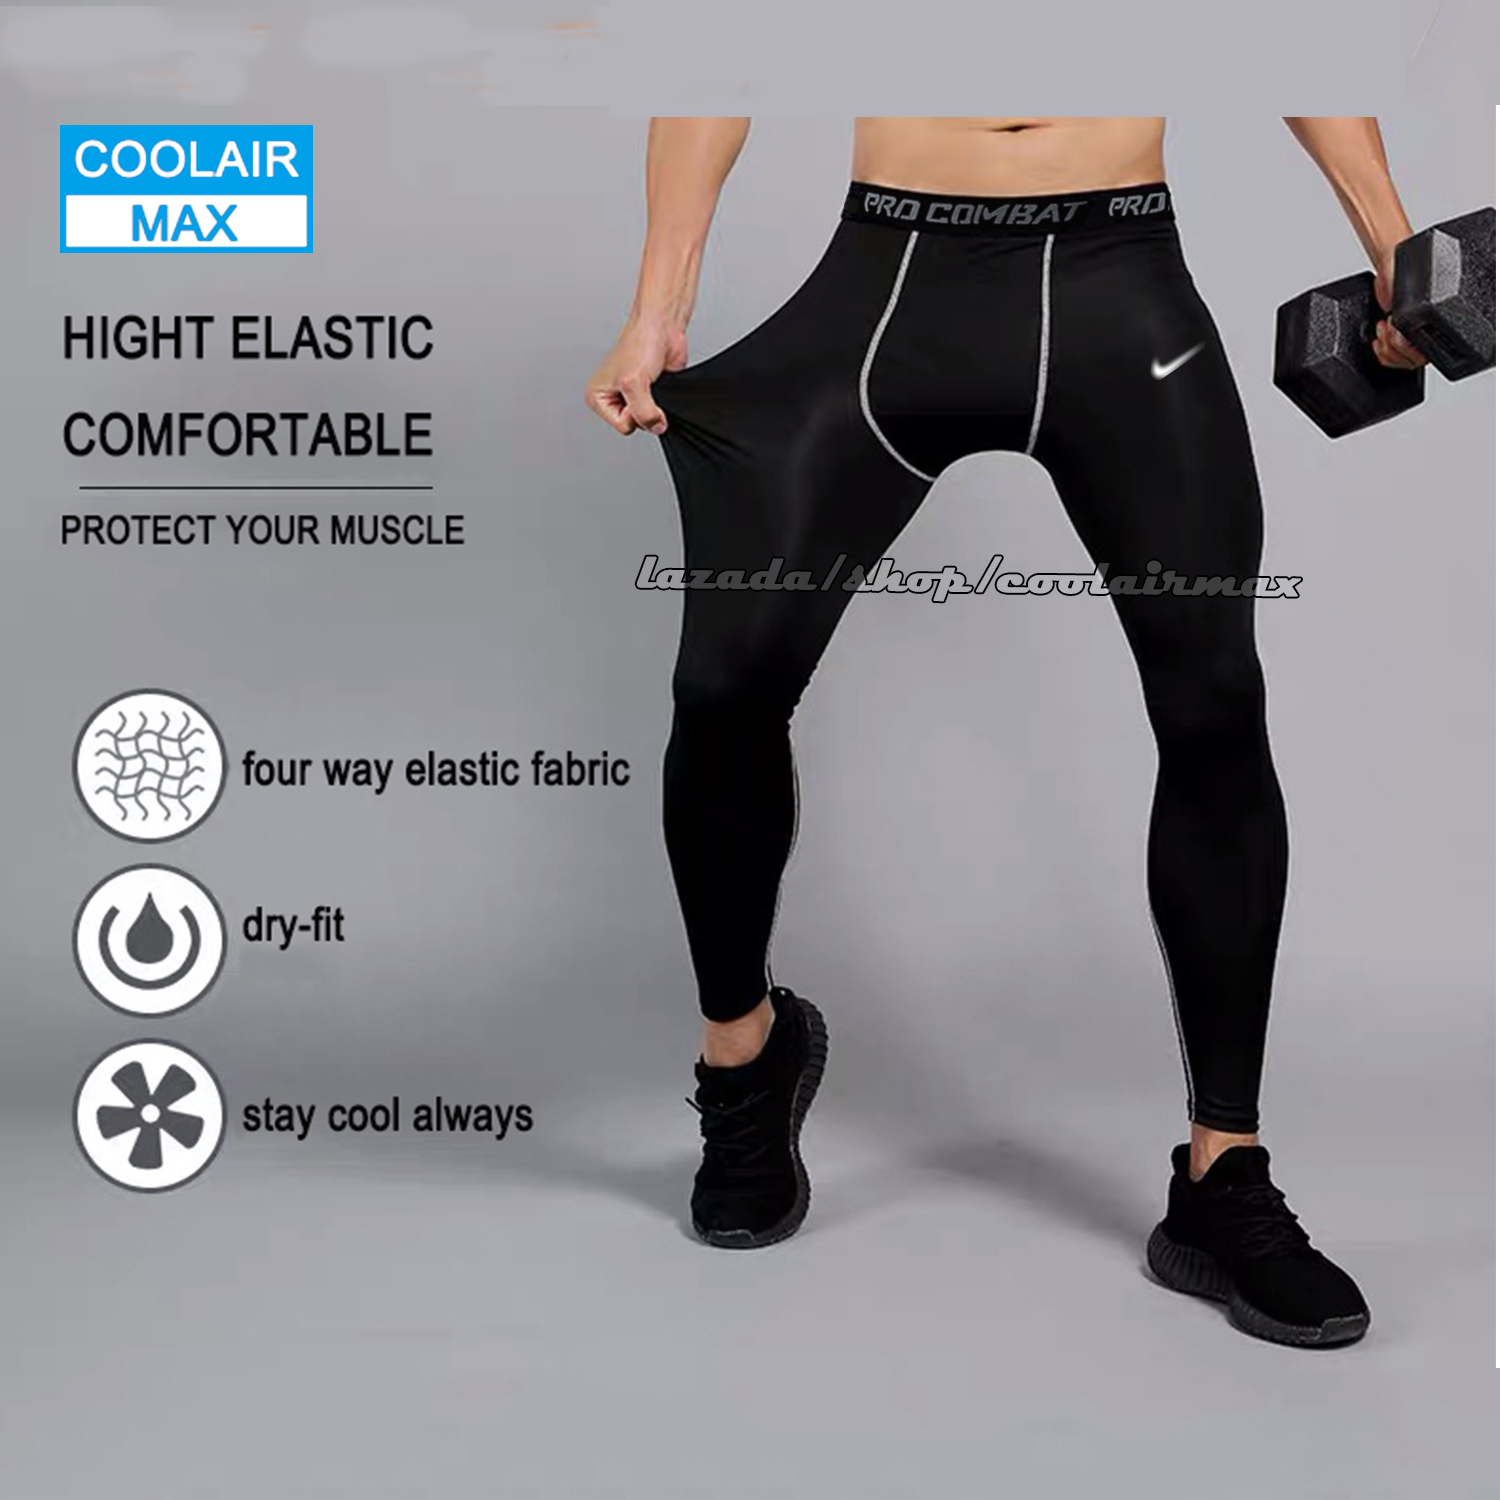 coolair pro combat compression leggings for men basketball | Lazada PH